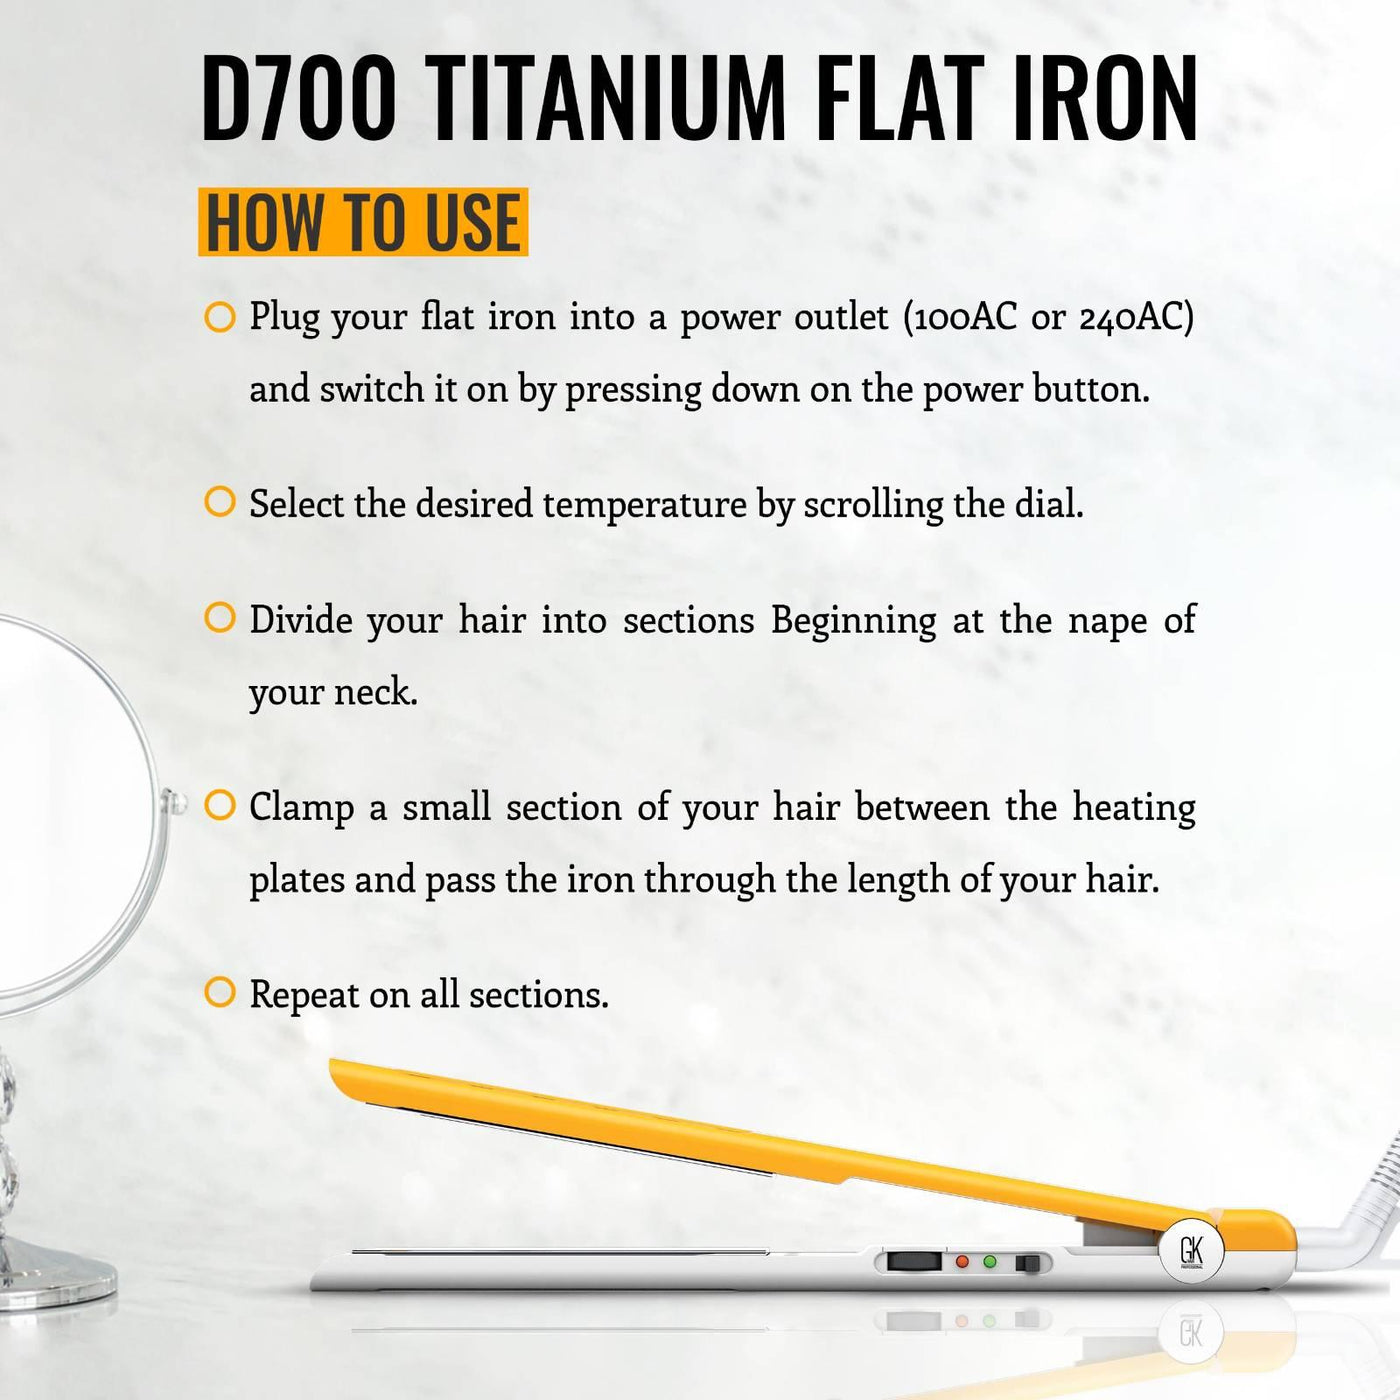 D700 Titanium Flat Iron | How To USE